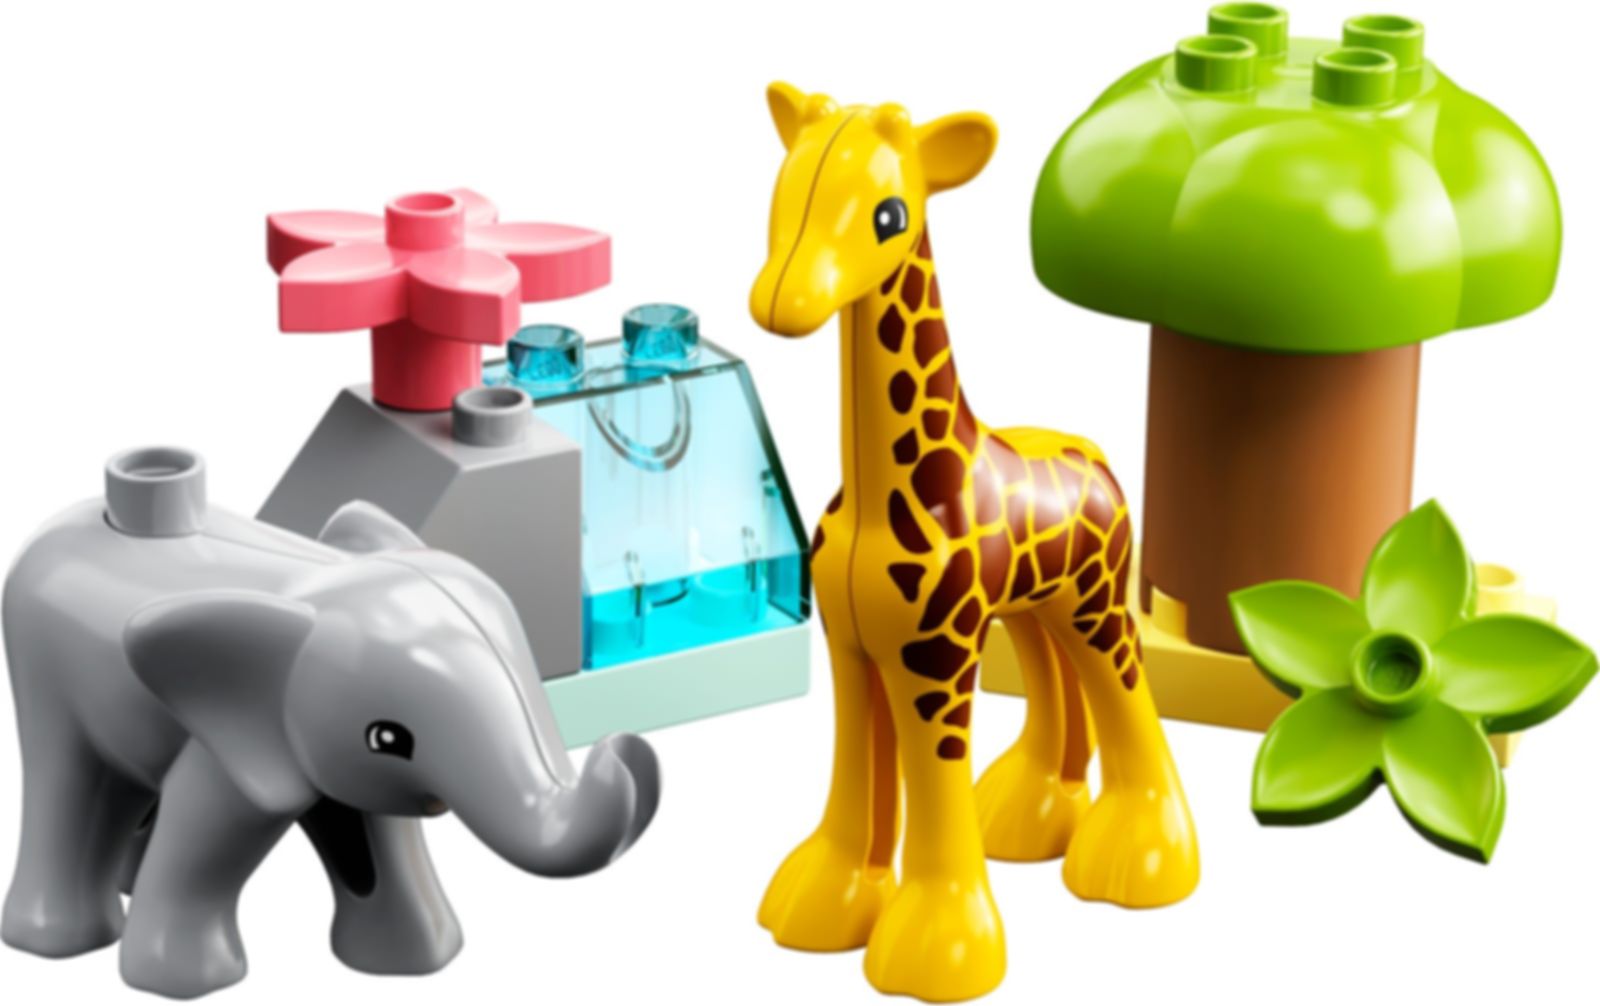 LEGO® DUPLO® Wild Animals of Africa components